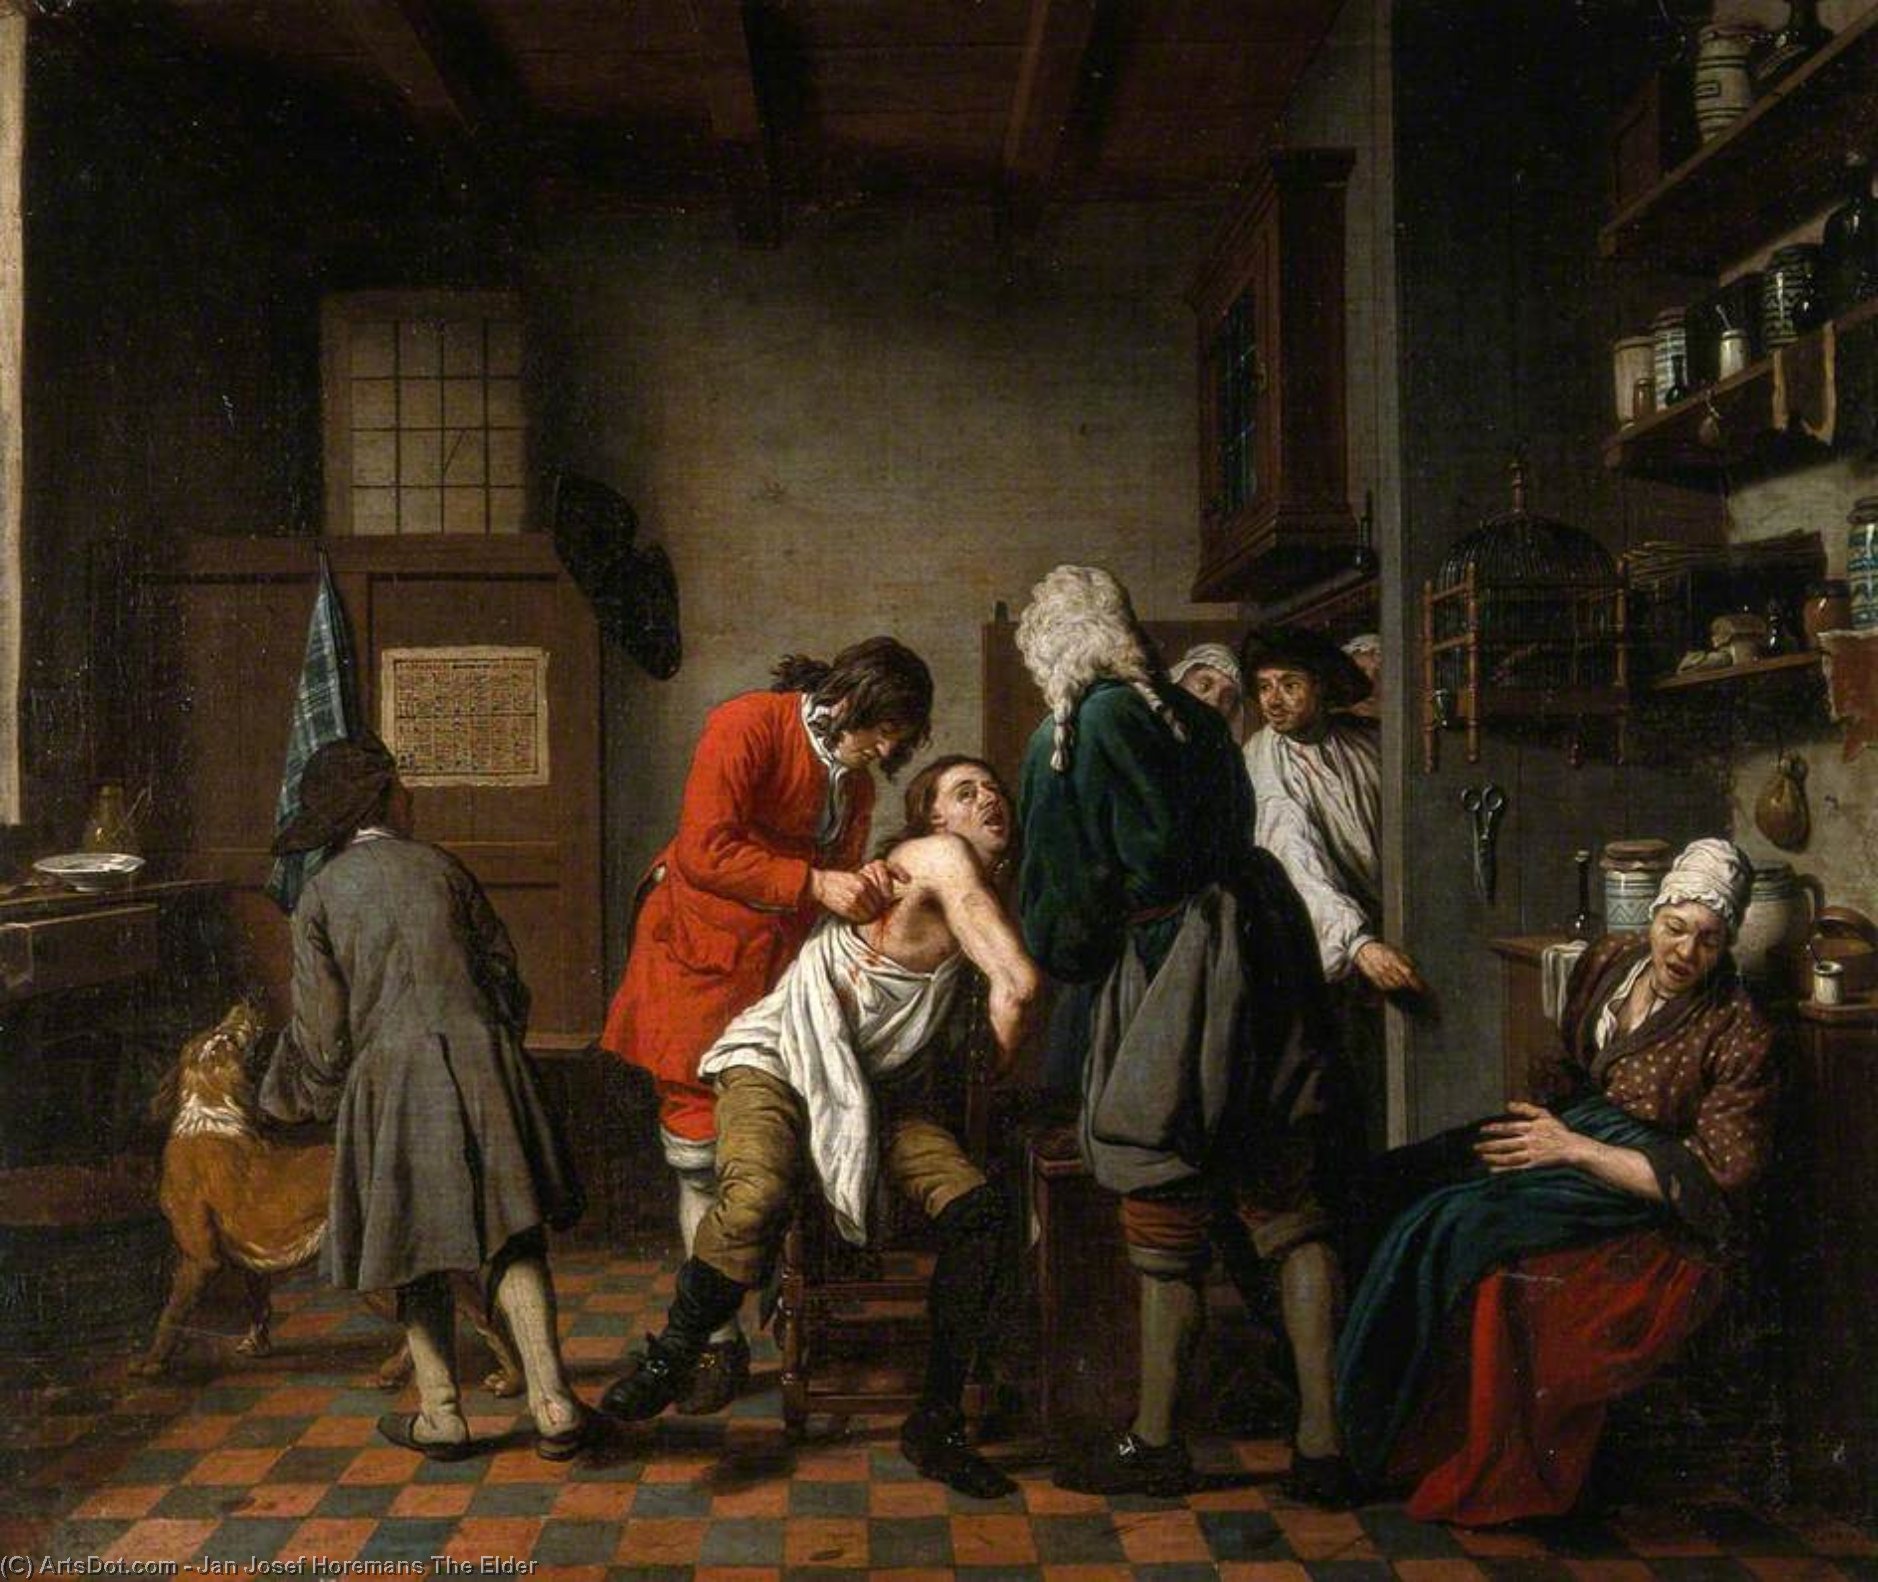 Buy Museum Art Reproductions Nterior With A Surgeon And His Apprentice Attending To A Patient by Jan Josef Horemans The Elder (1682-1759, Belgium) | ArtsDot.com